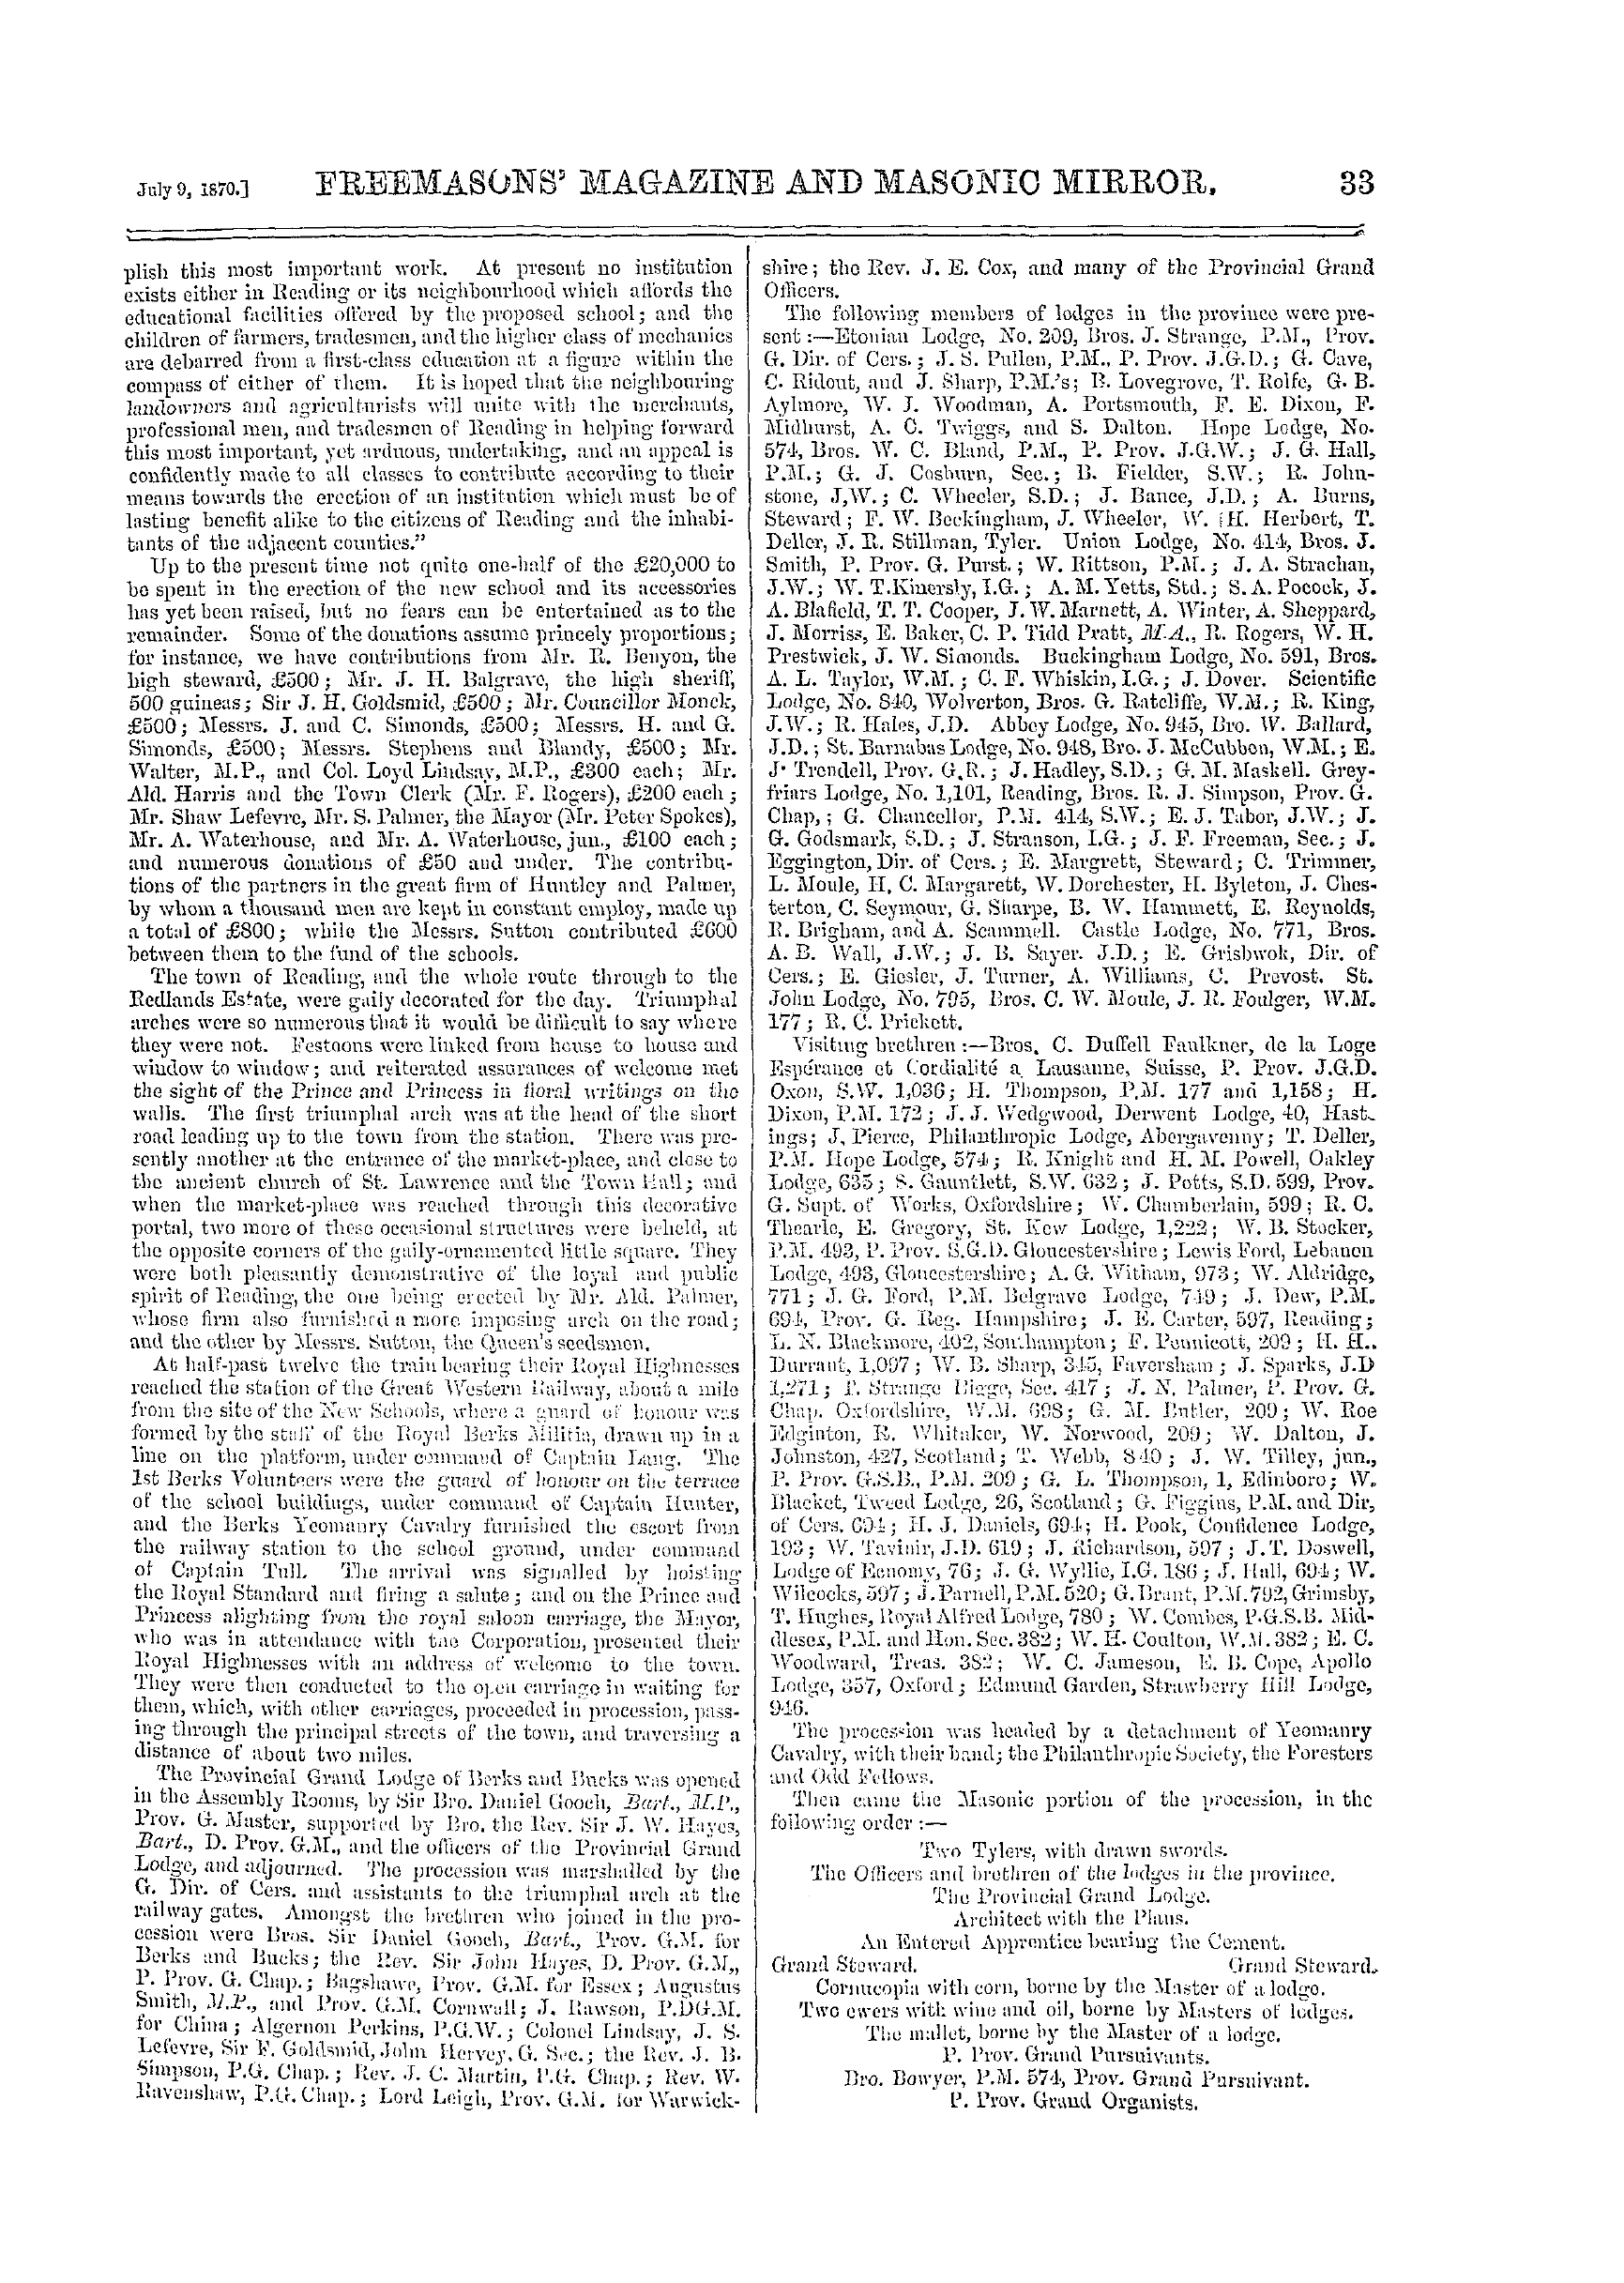 The Freemasons' Monthly Magazine: 1870-07-09 - Provincial.